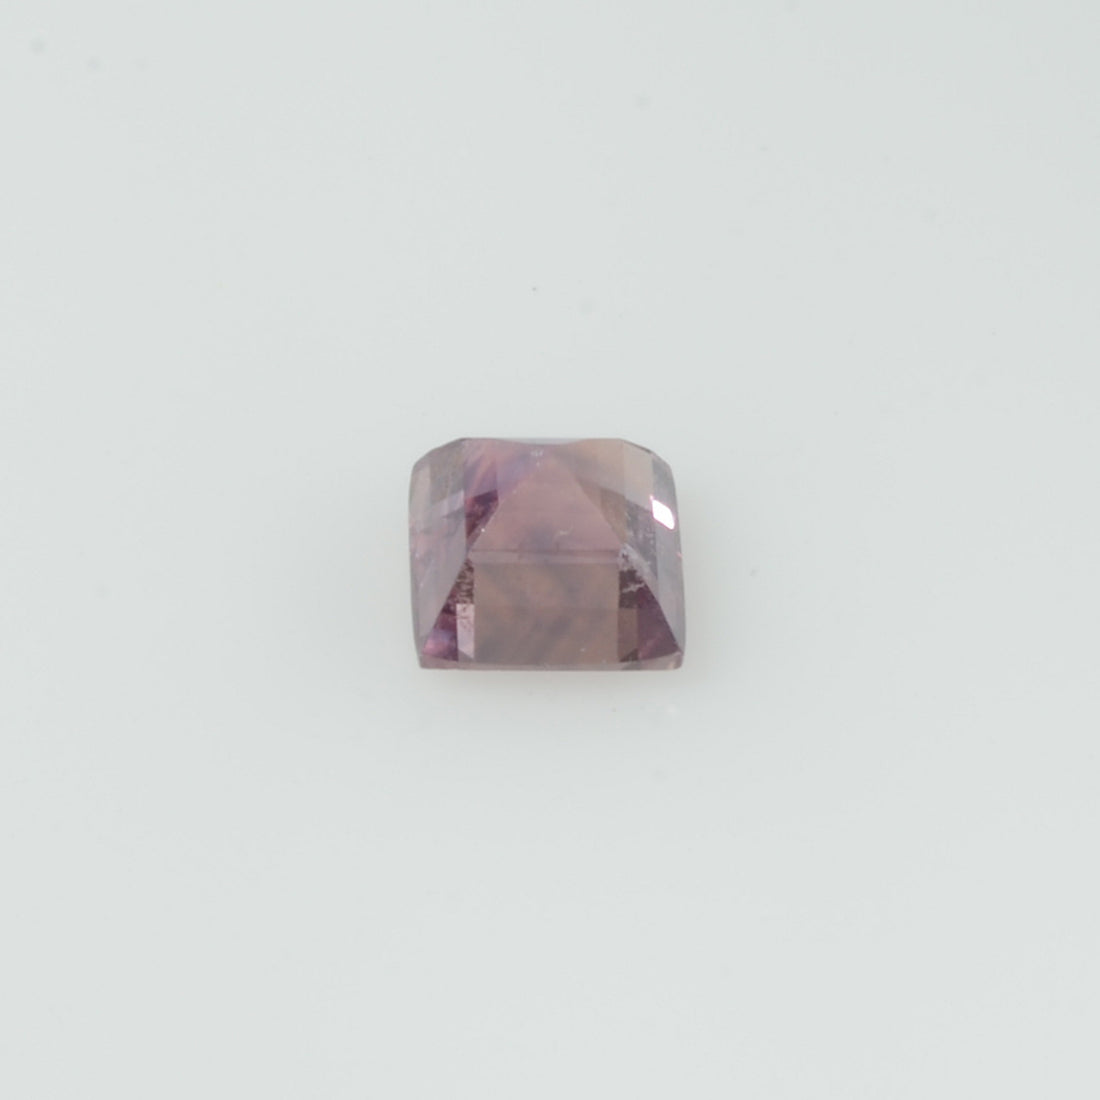 0.85 cts Natural Pink Sapphire Loose Gemstone Square Octagon Cut - Thai Gems Export Ltd.